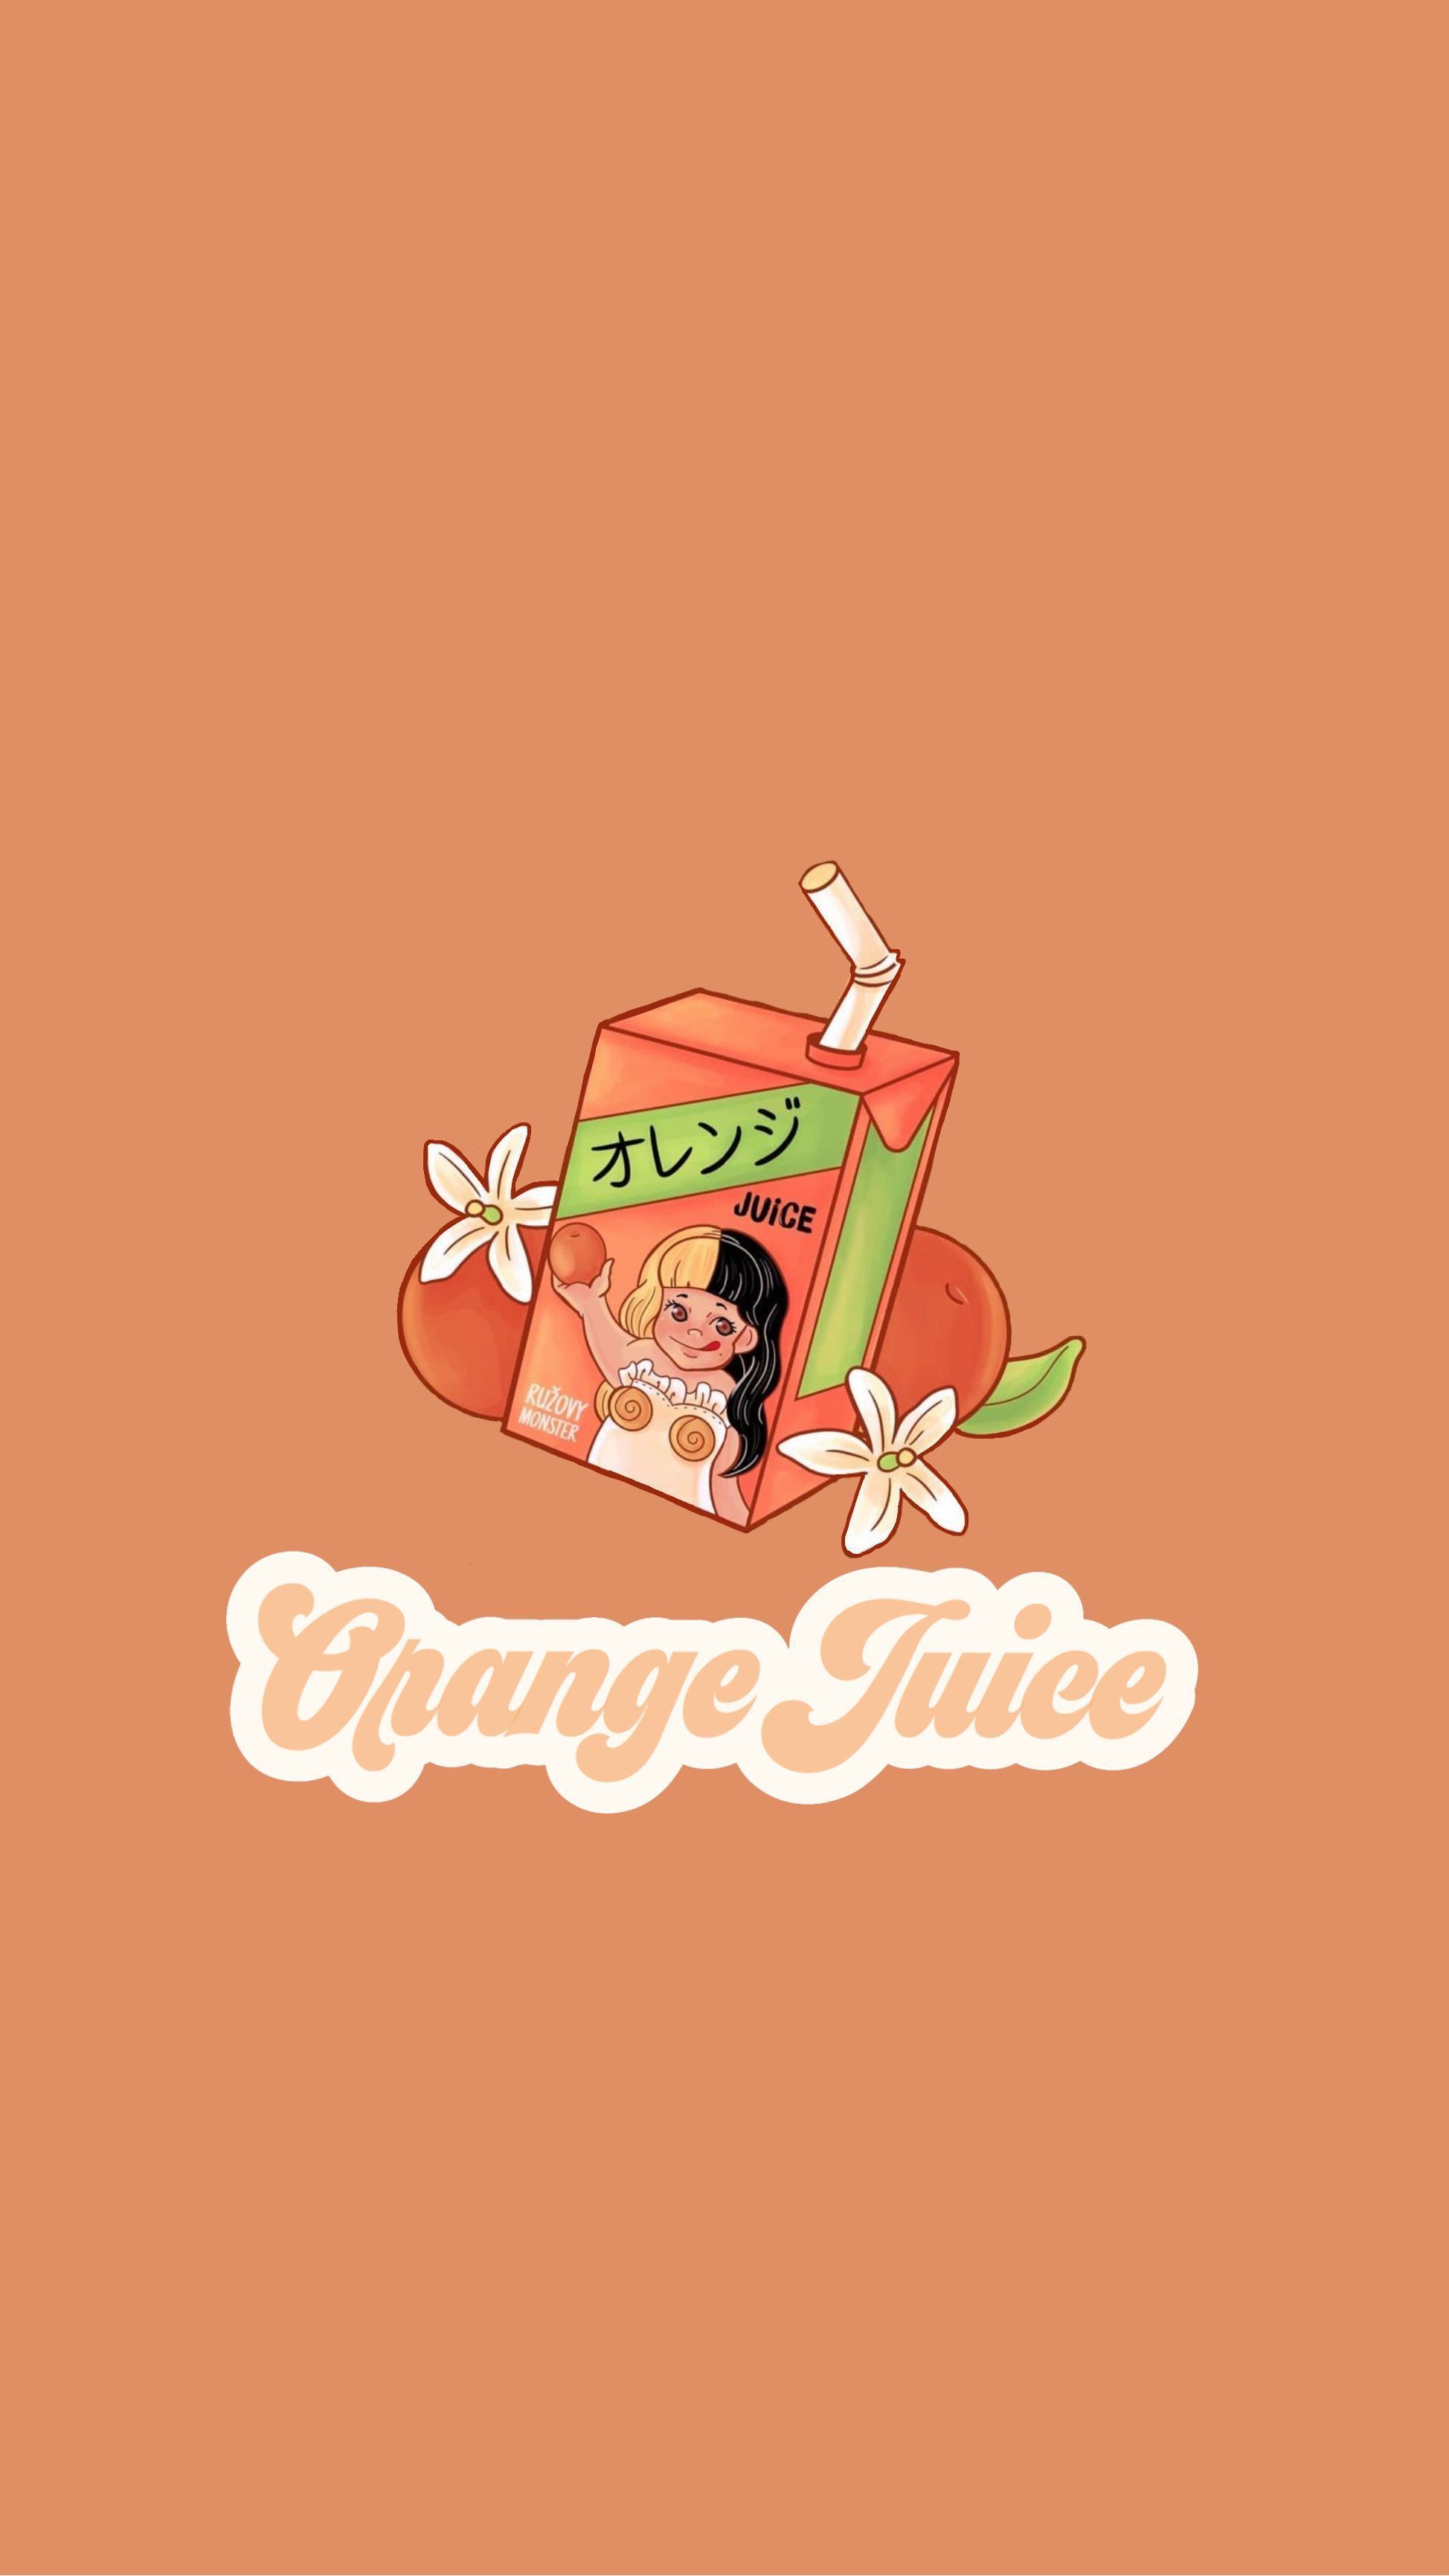 A logo for orange juice - Melanie Martinez